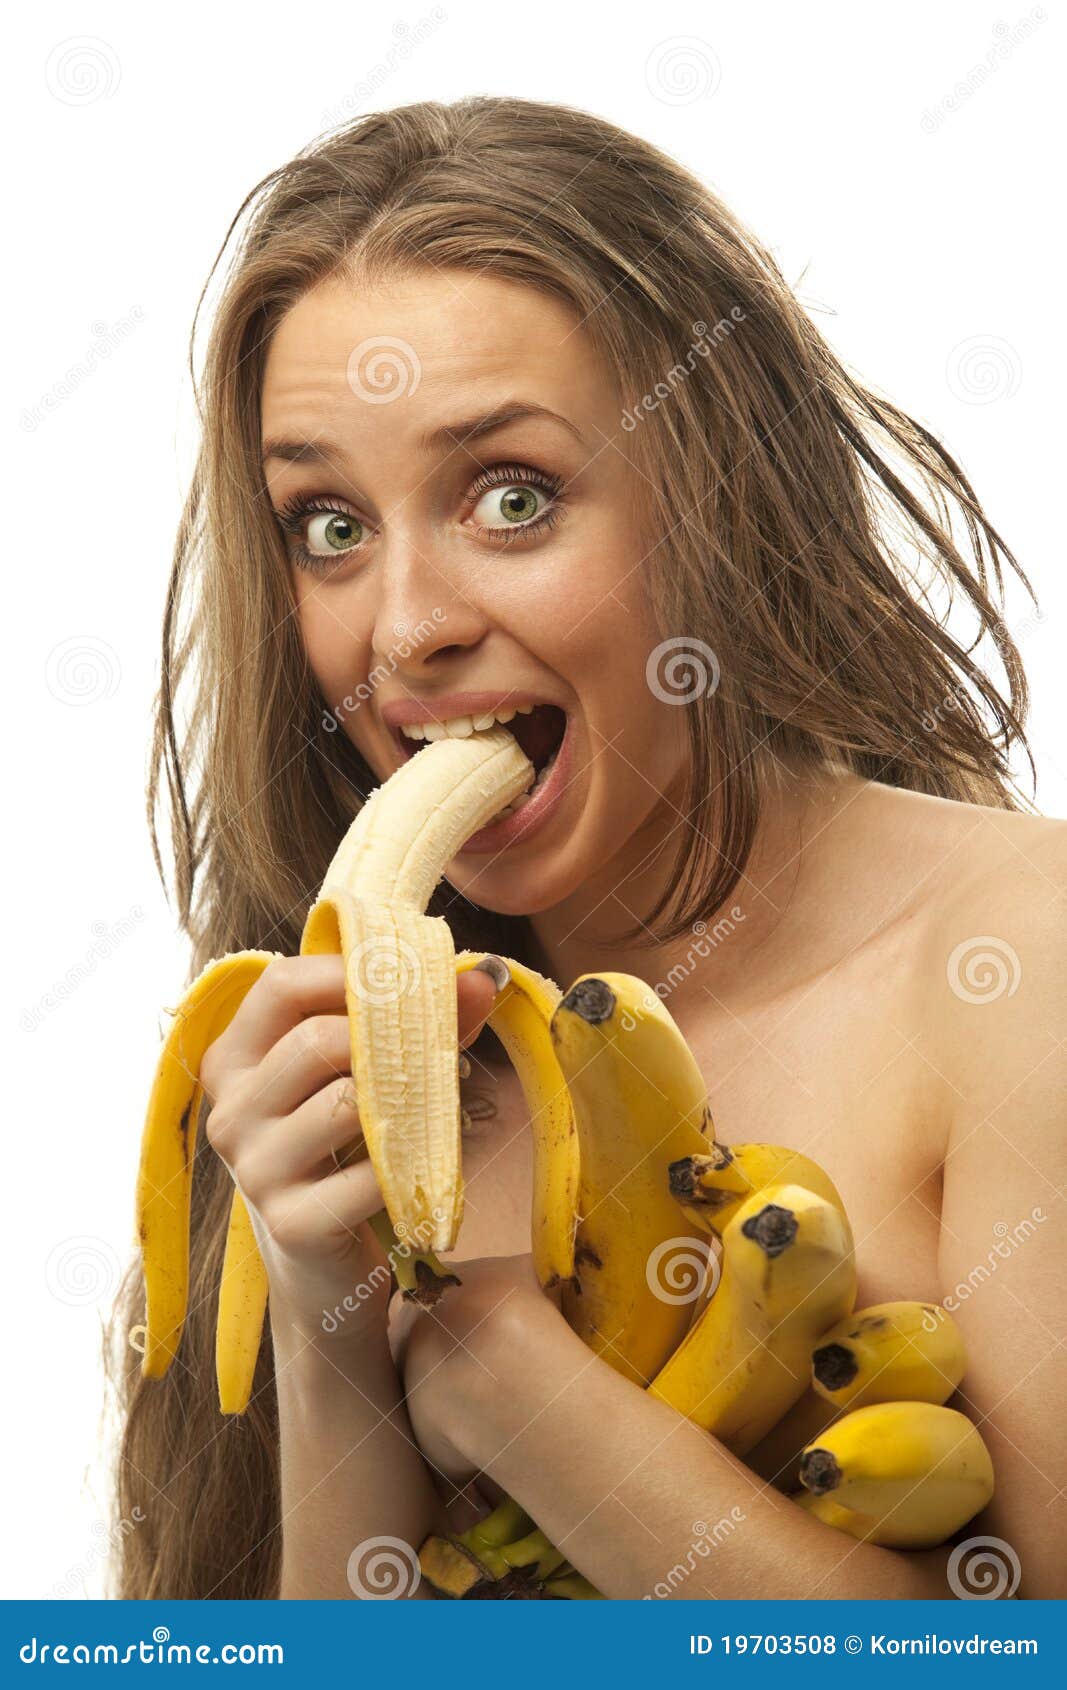 Брюнетка С Бананом В Киске